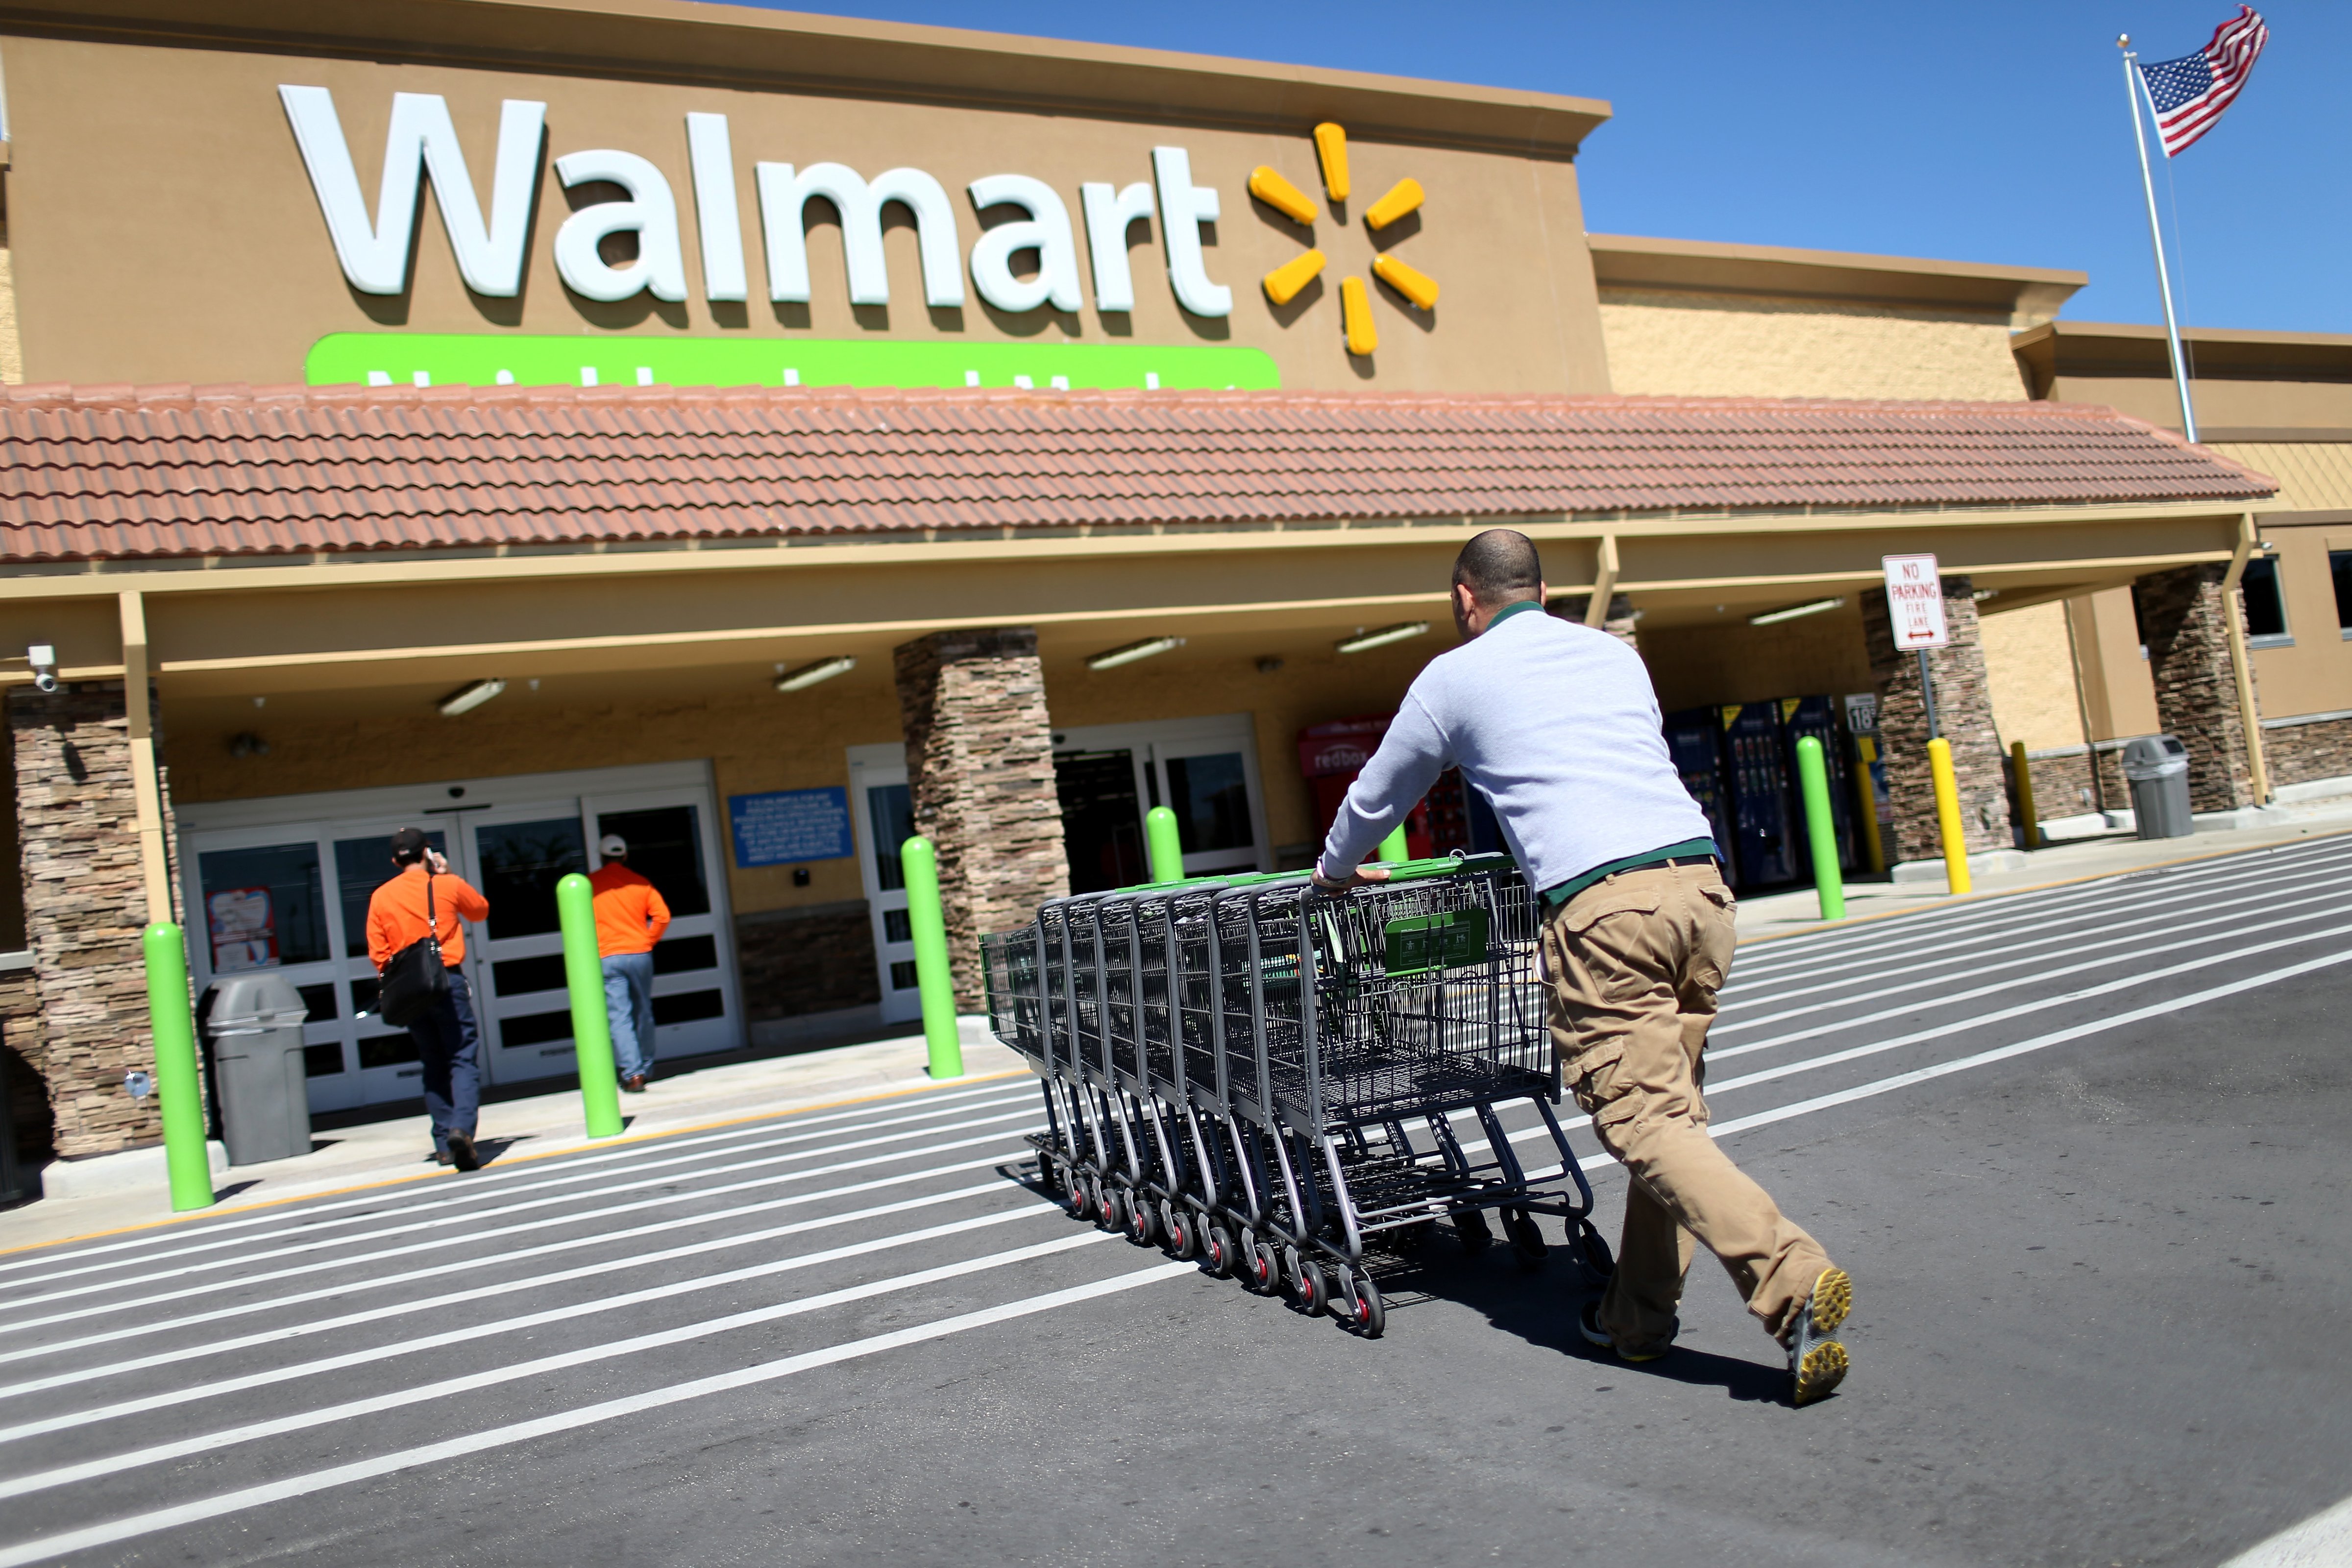 Walmart employee Yurdin Velazquez pushes grocery carts at a Walmart store on February 19, 2015 in Miami, Florida. (Joe Raedle&mdash;Getty Images)